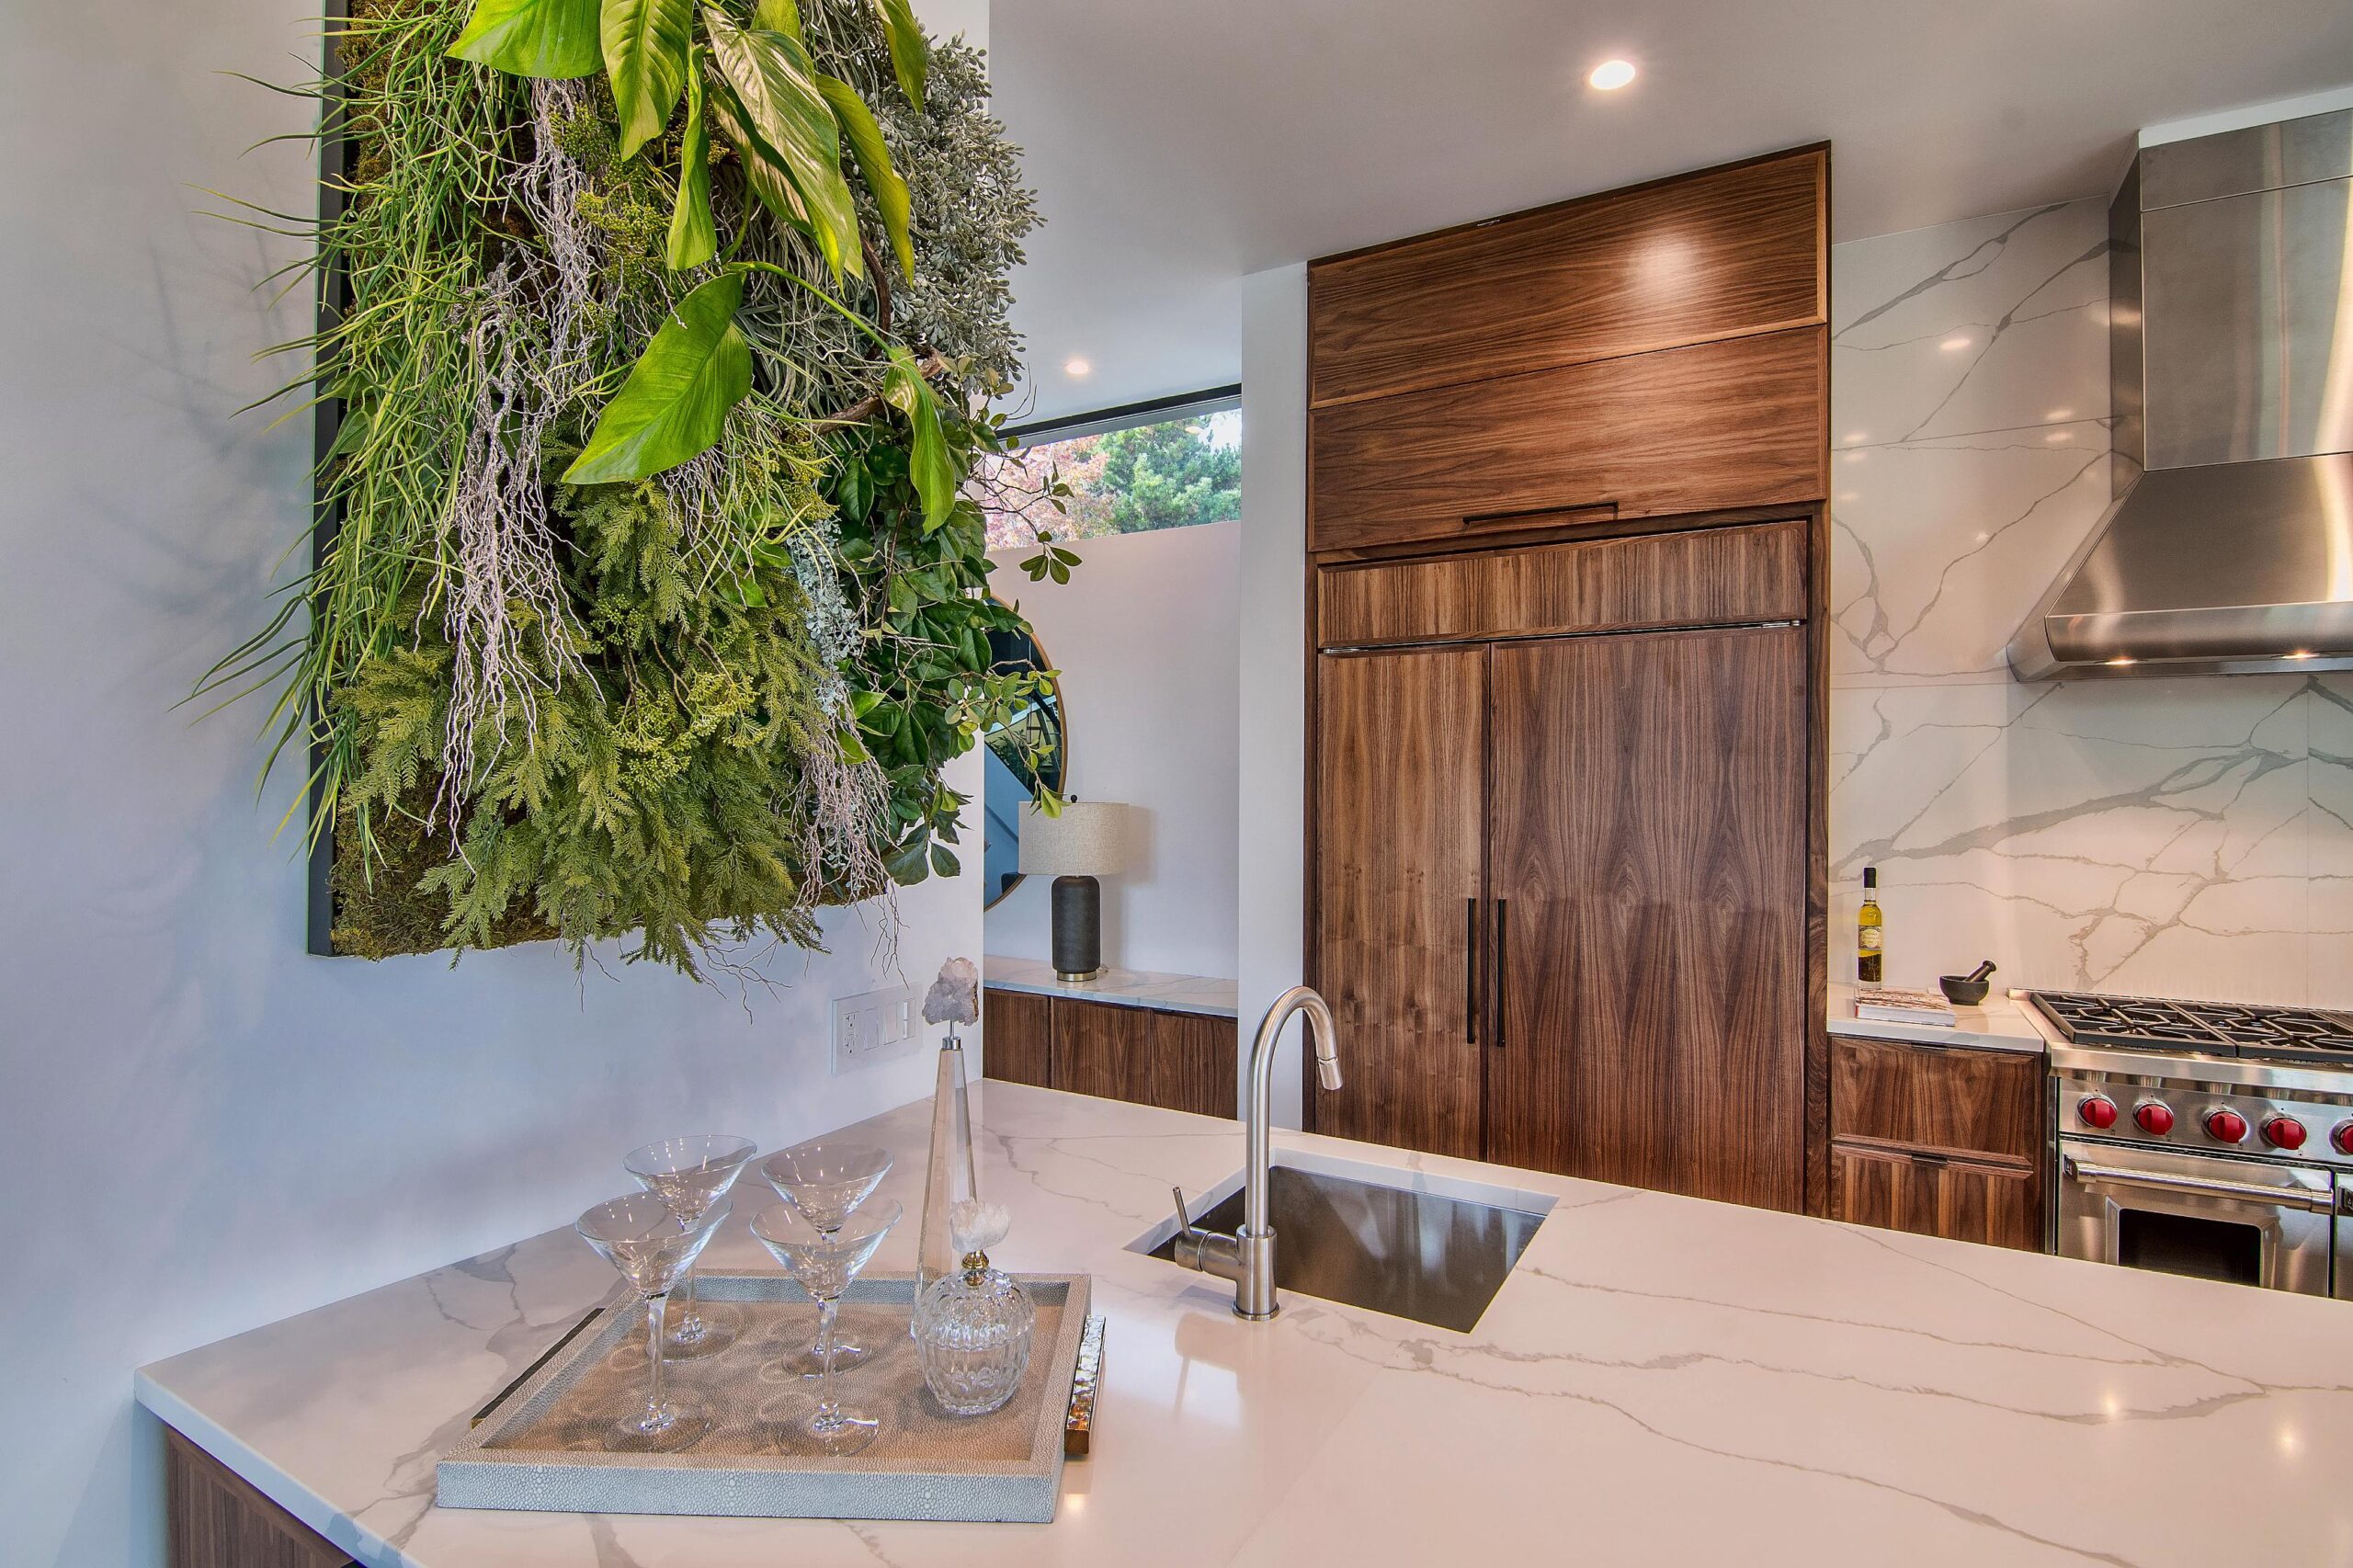 Modern California kitchen that incorporates natural element